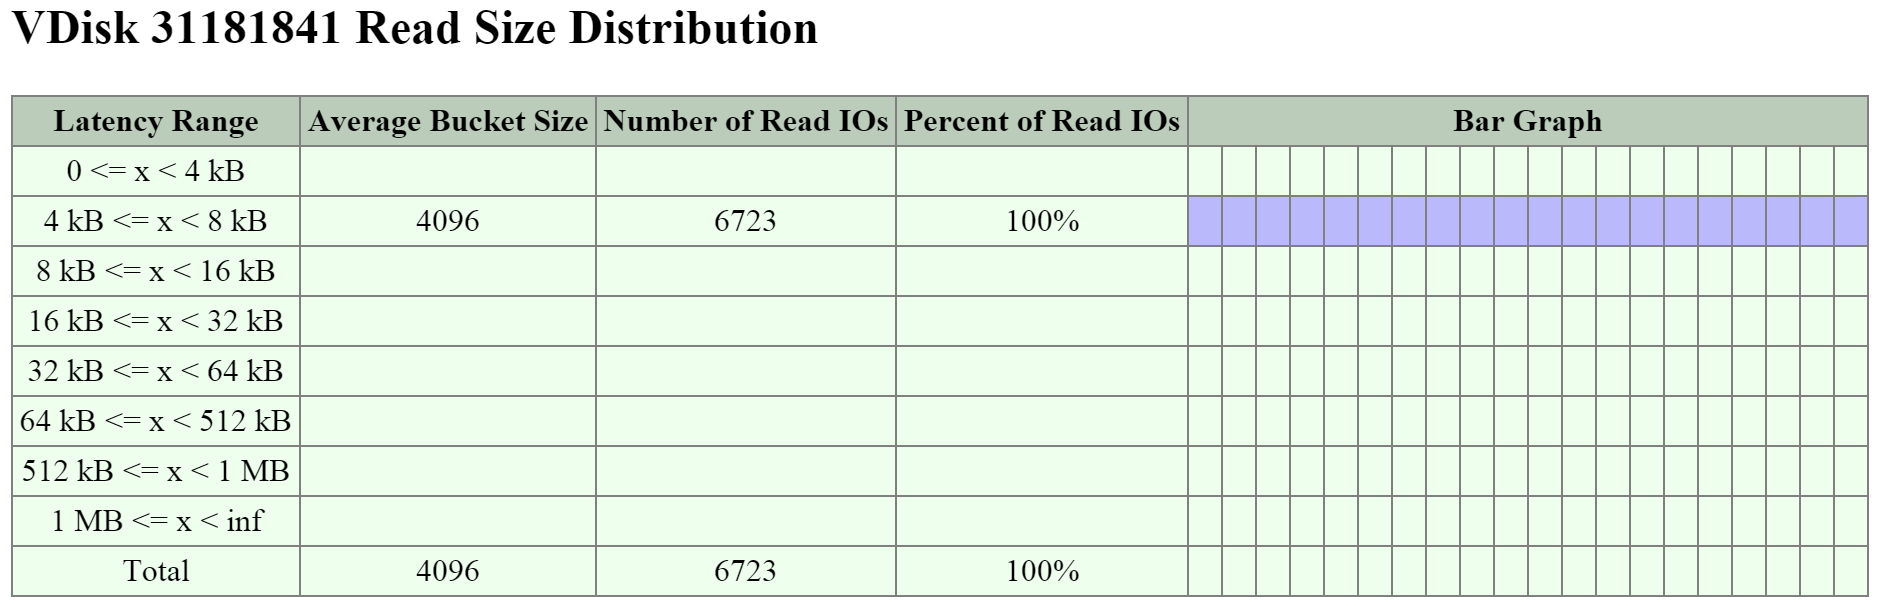 2009 Page - vDisk Stats - Read I/O Size